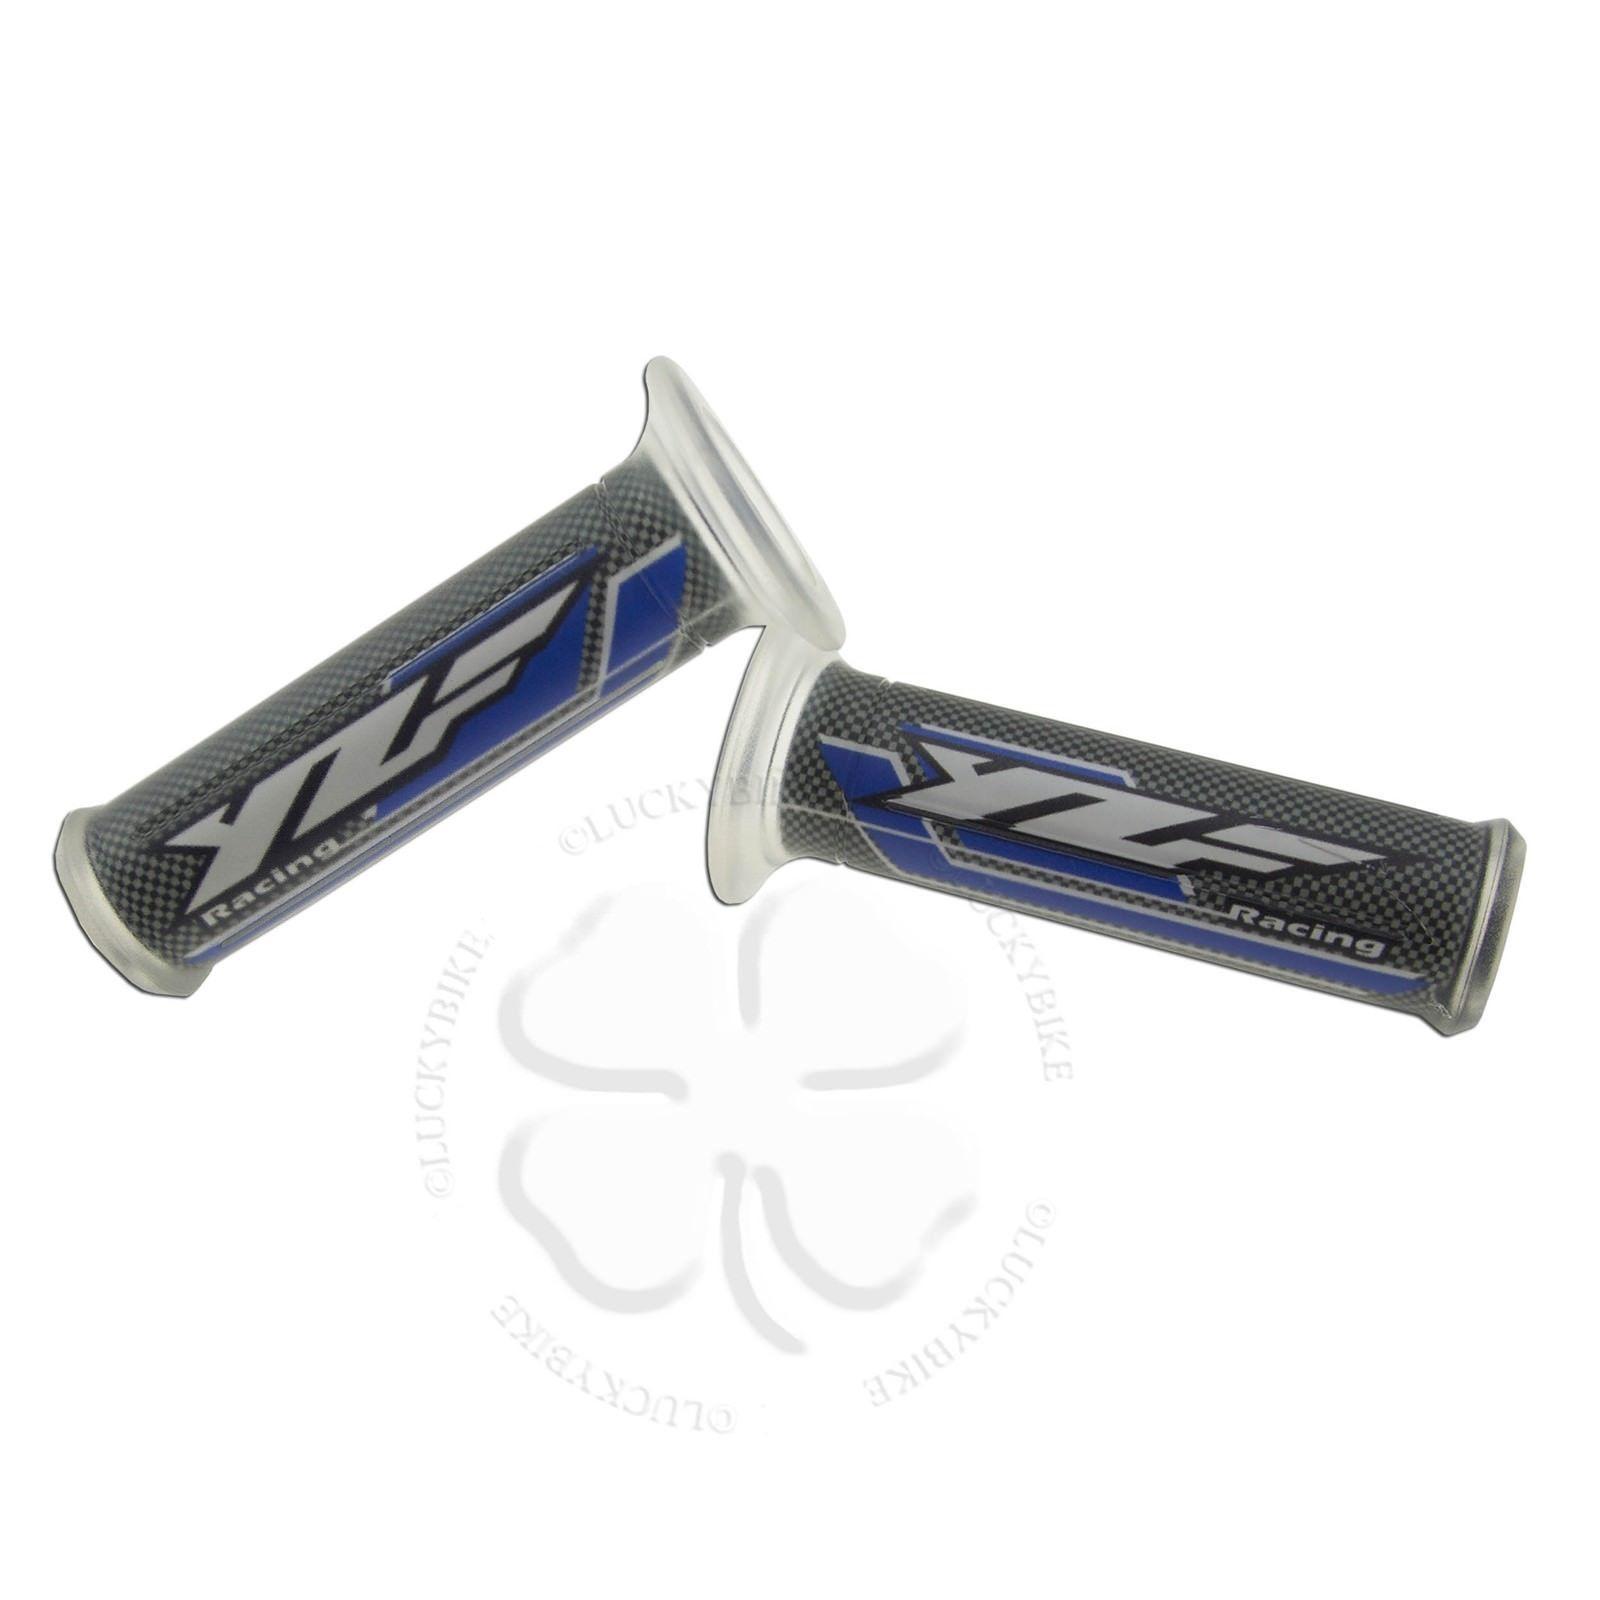 YZF Logo - Blue YZF Logo Hand Grips Yamaha R1 R6 R6s 600 1000 600R 1990-2014 ...